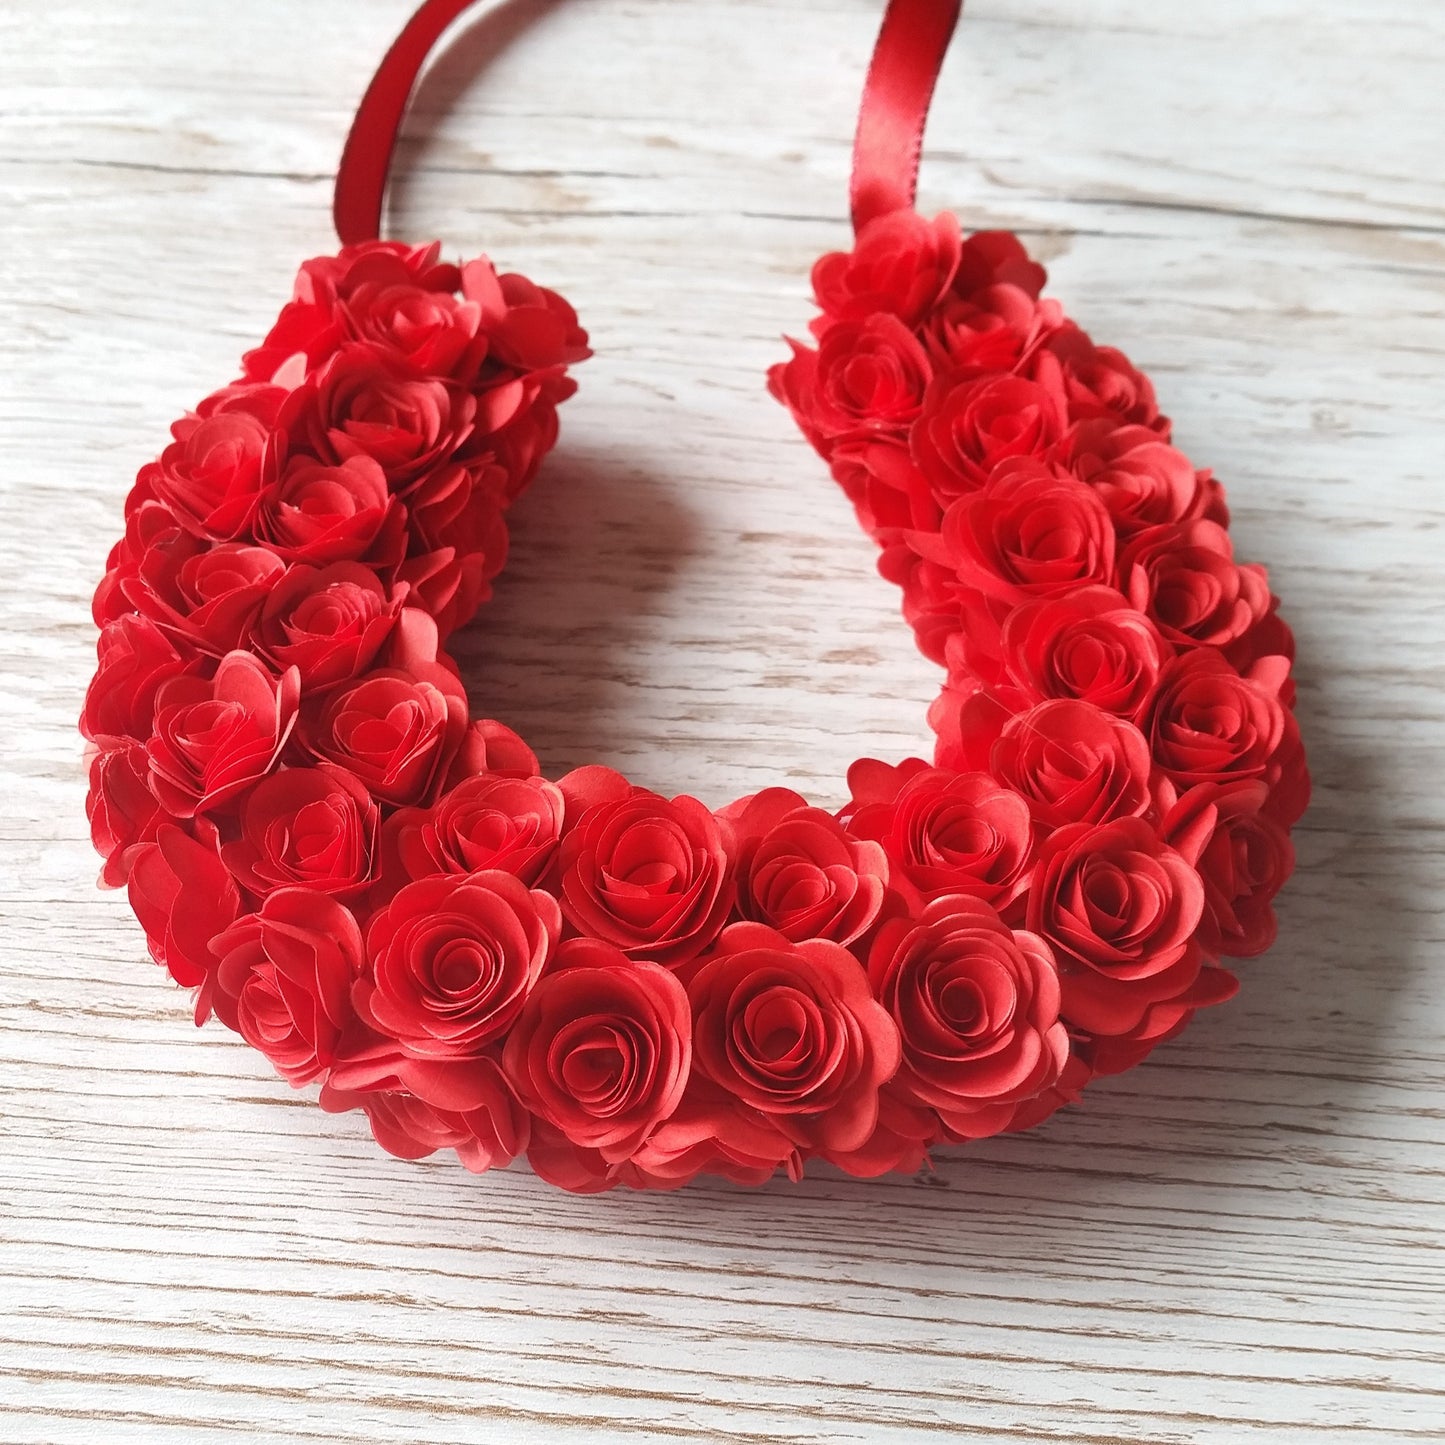 Red Horseshoe Flower Wreath - Wedding Decor, Home Decor or Gift